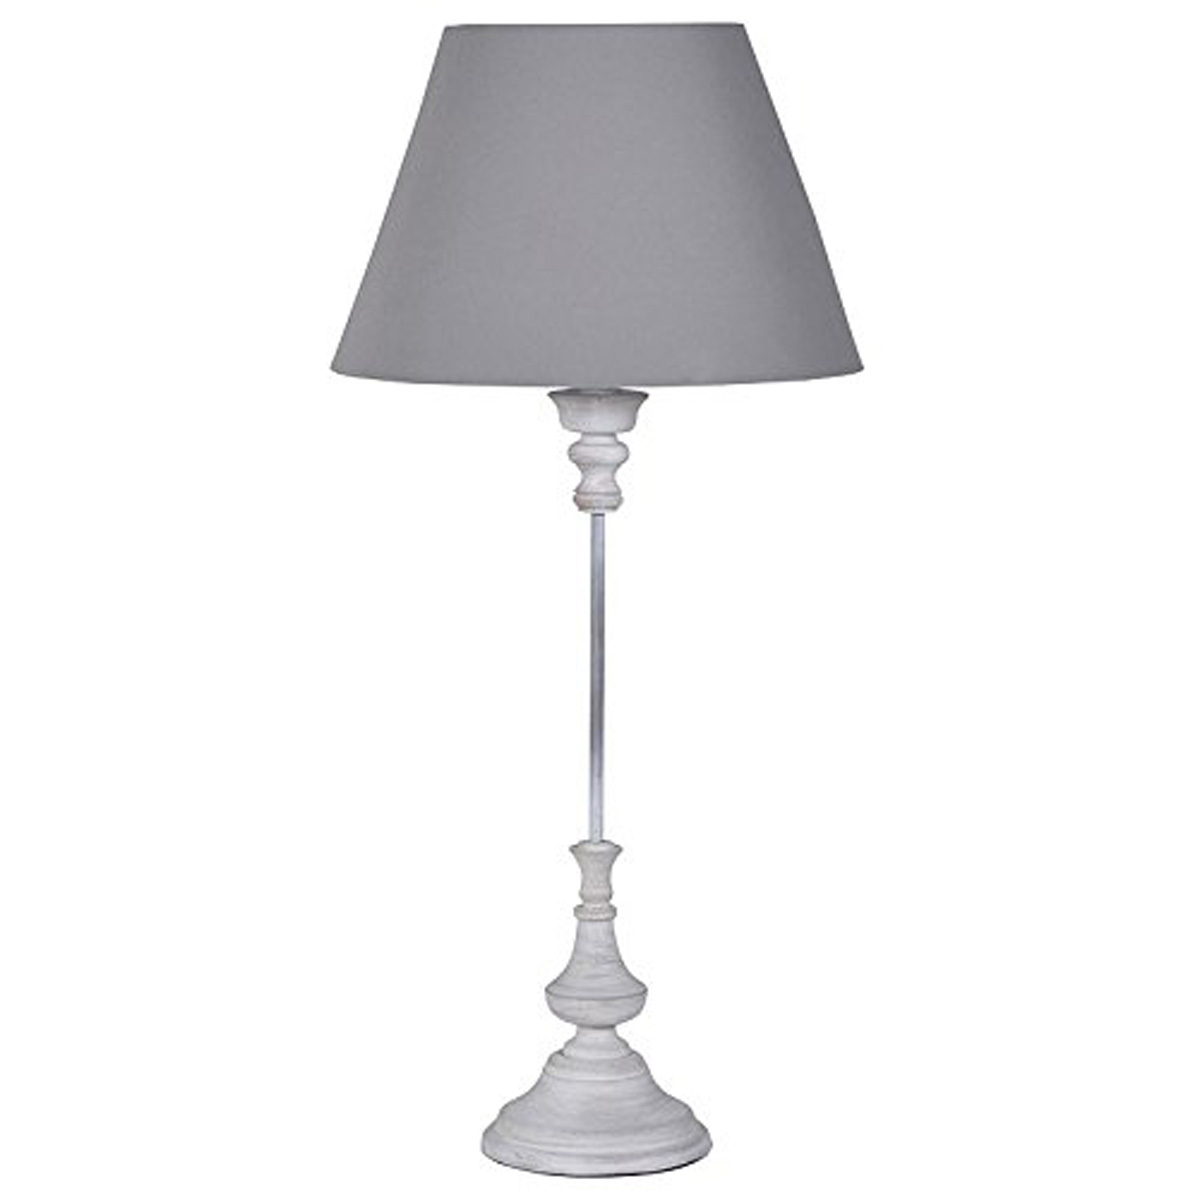 Tall Elegant Grey Table Lamp Interior, Tall Wood Table Lamps